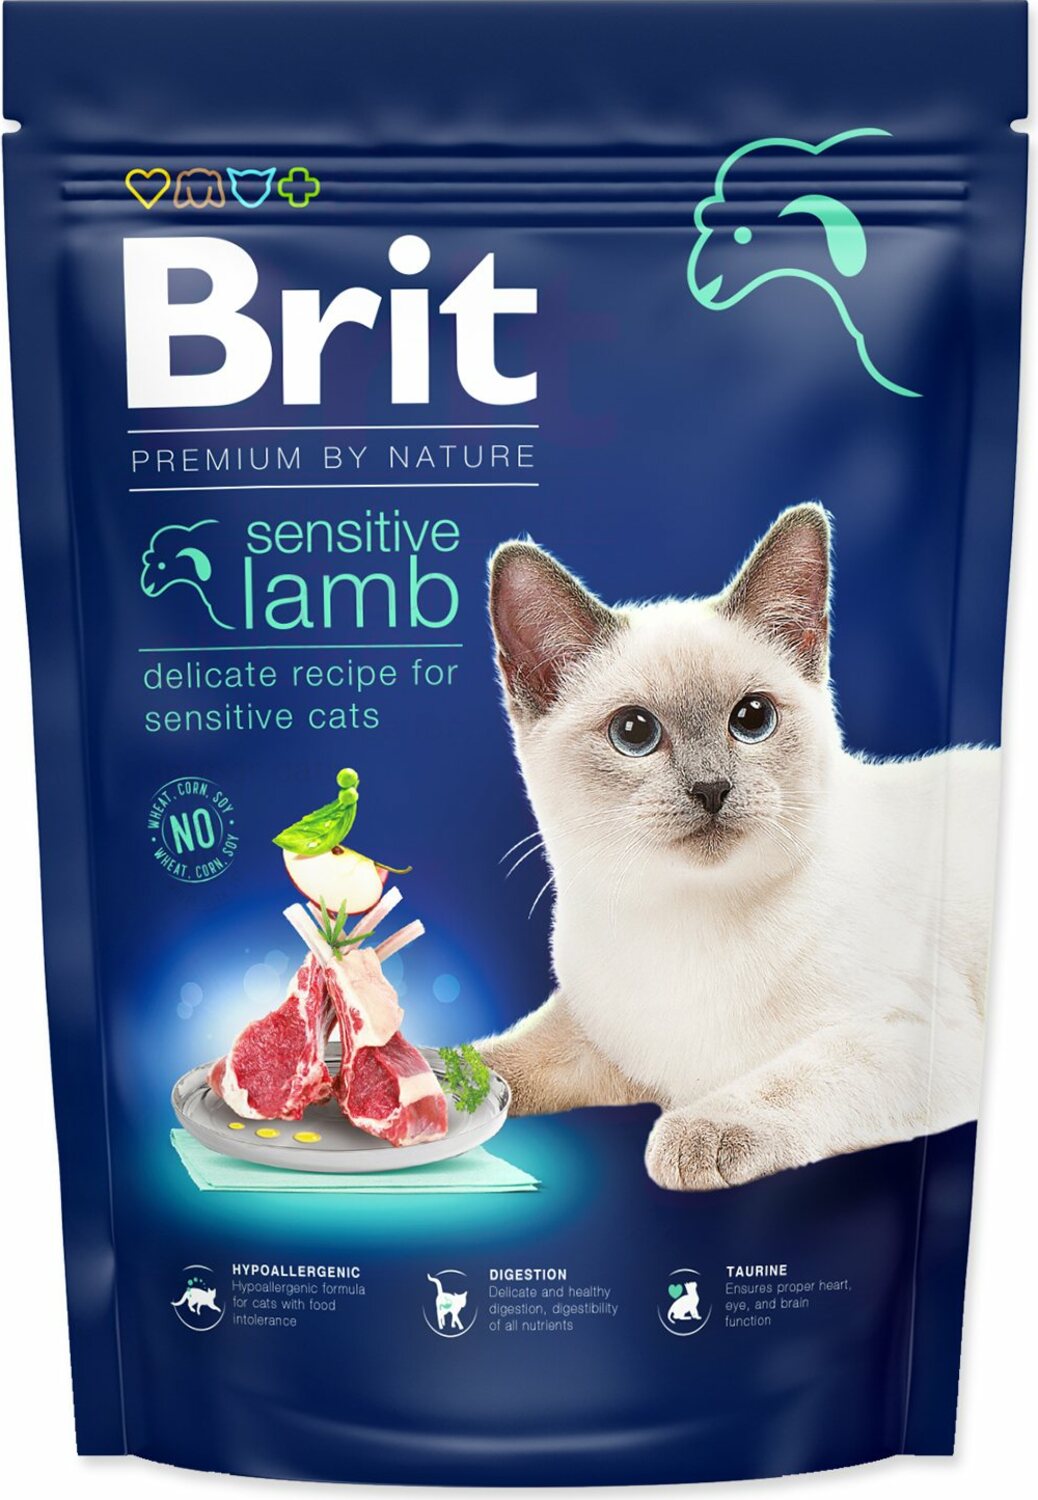 Krmivo Brit Premium by Nature Cat sensitive Lamb 800g